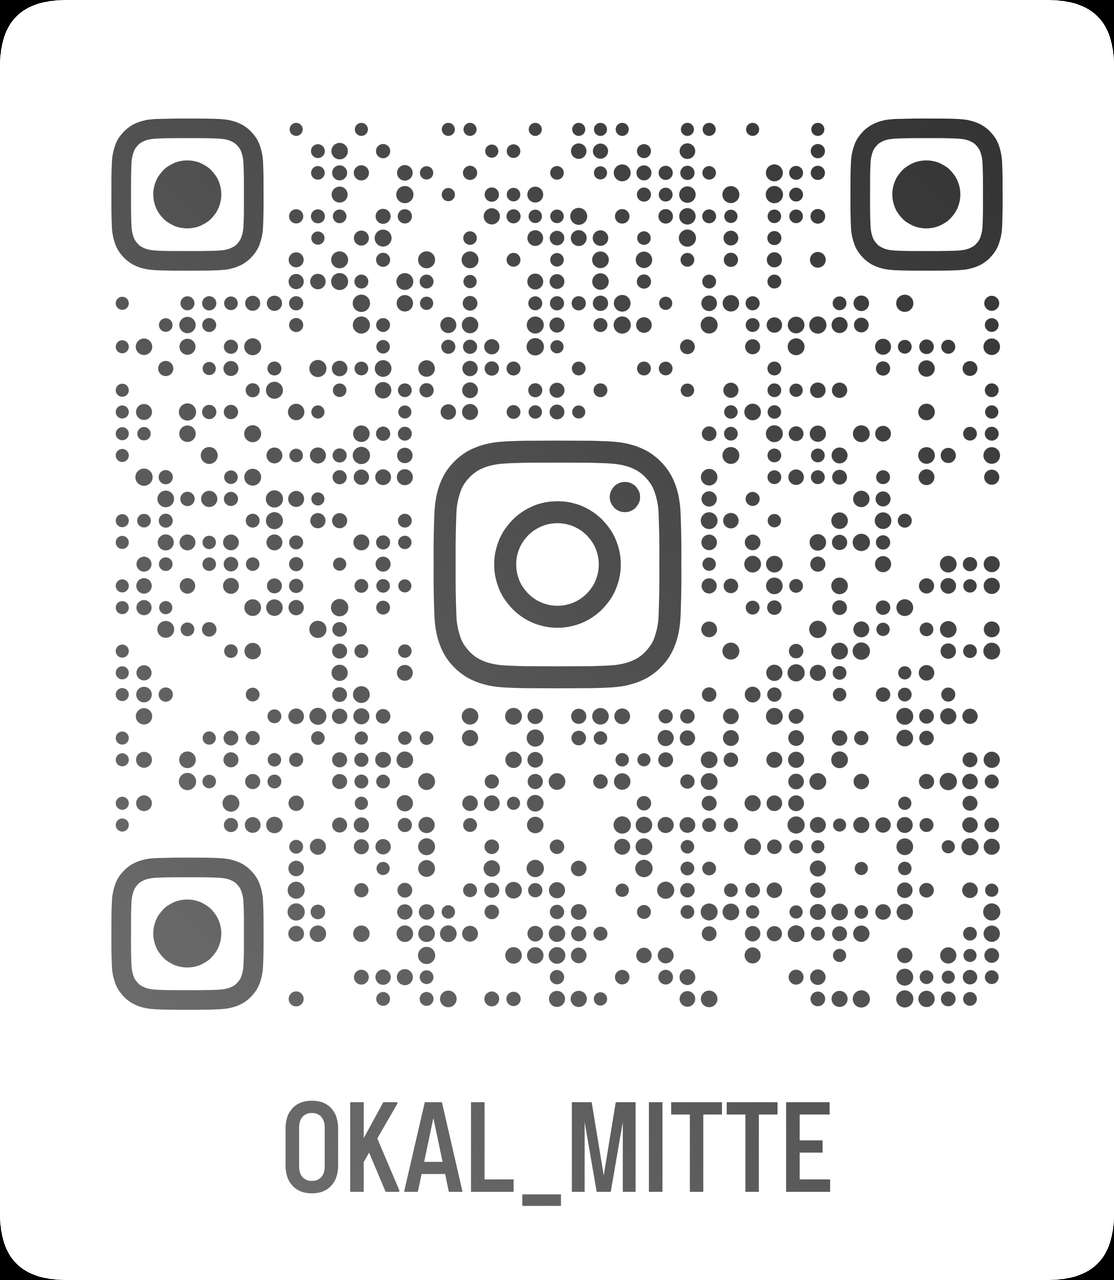 OKAL_MITTE